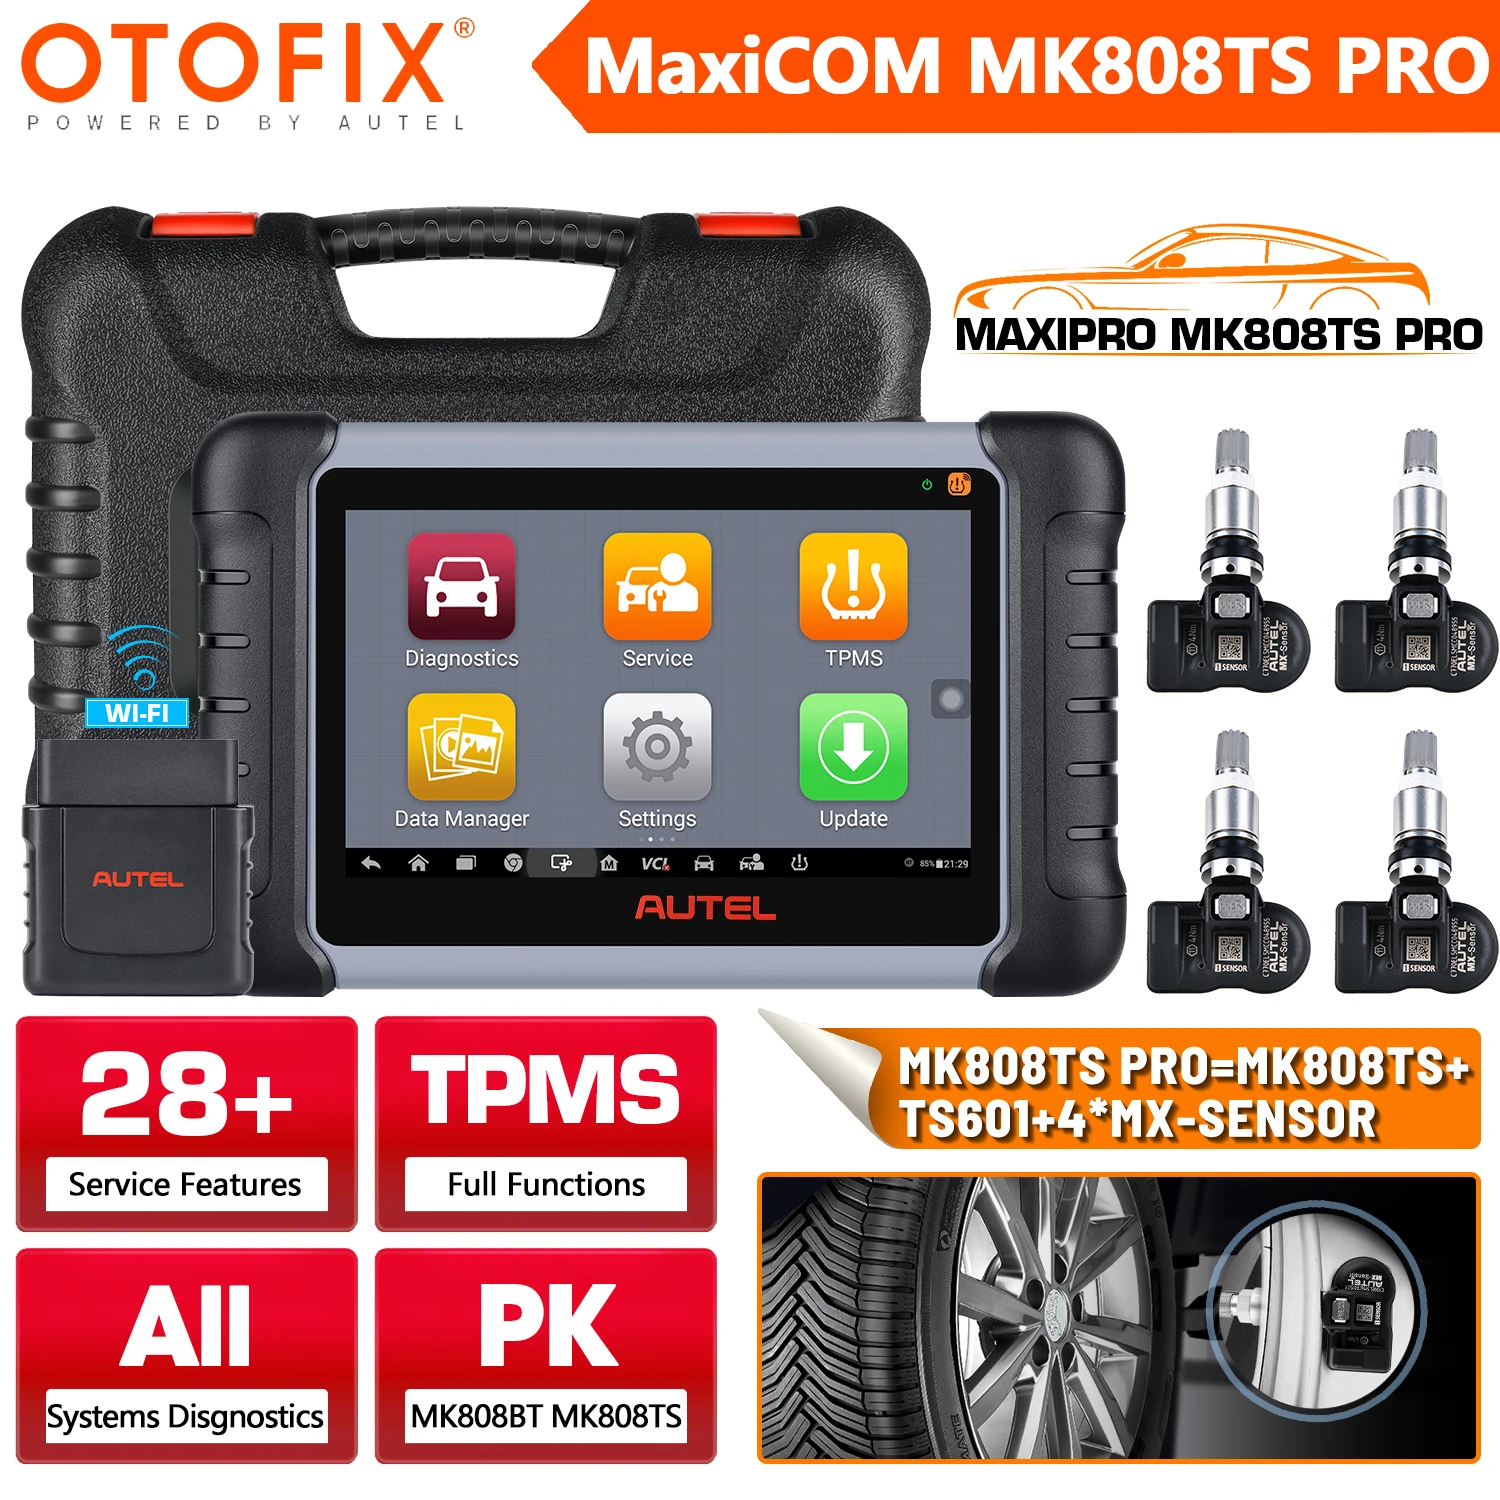 Autel MaxiCOM MK808TS PRO Auto Diagnostic Tool OBD2 Scanner Code Reader With Sensor TPMS Programing Functions PK MK808BT MK808TS car battery trickle charger